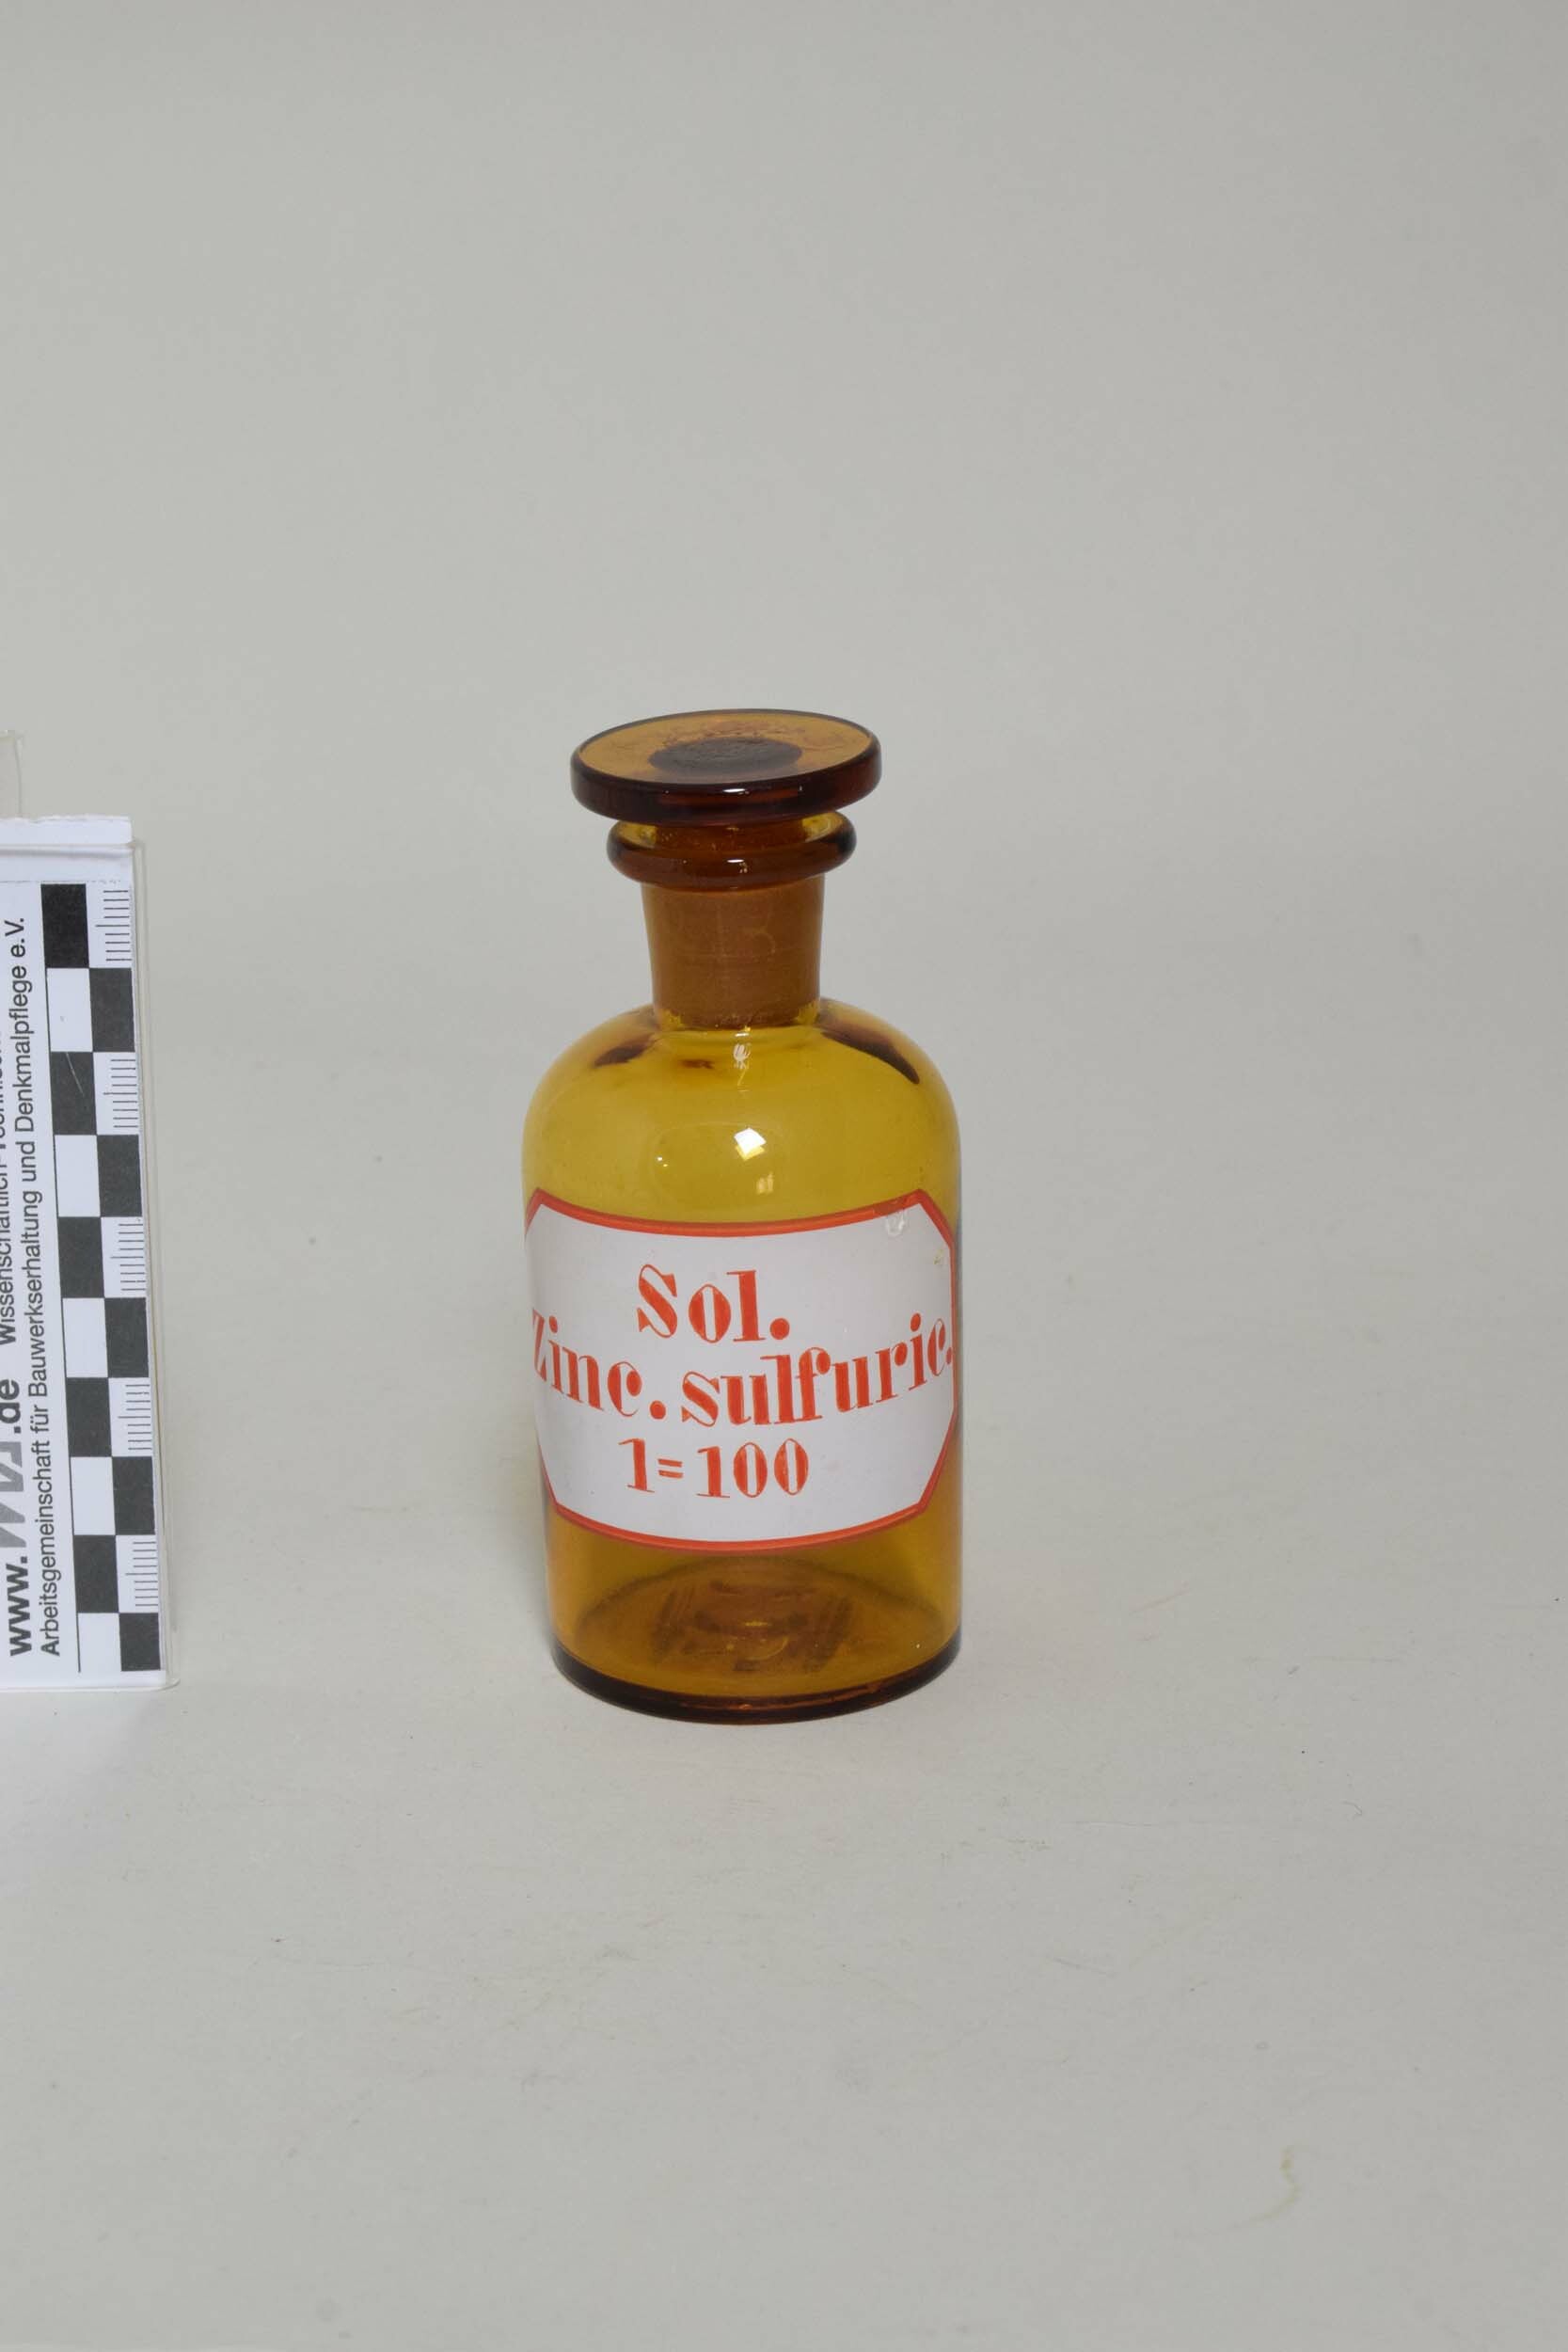 Apothekenflasche "Sol. Zinc. Sulfuric. / 1=100" (Zincum Suluricum 1:100, Zinkvitriol) (Heimatmuseum Dohna CC BY-NC-SA)